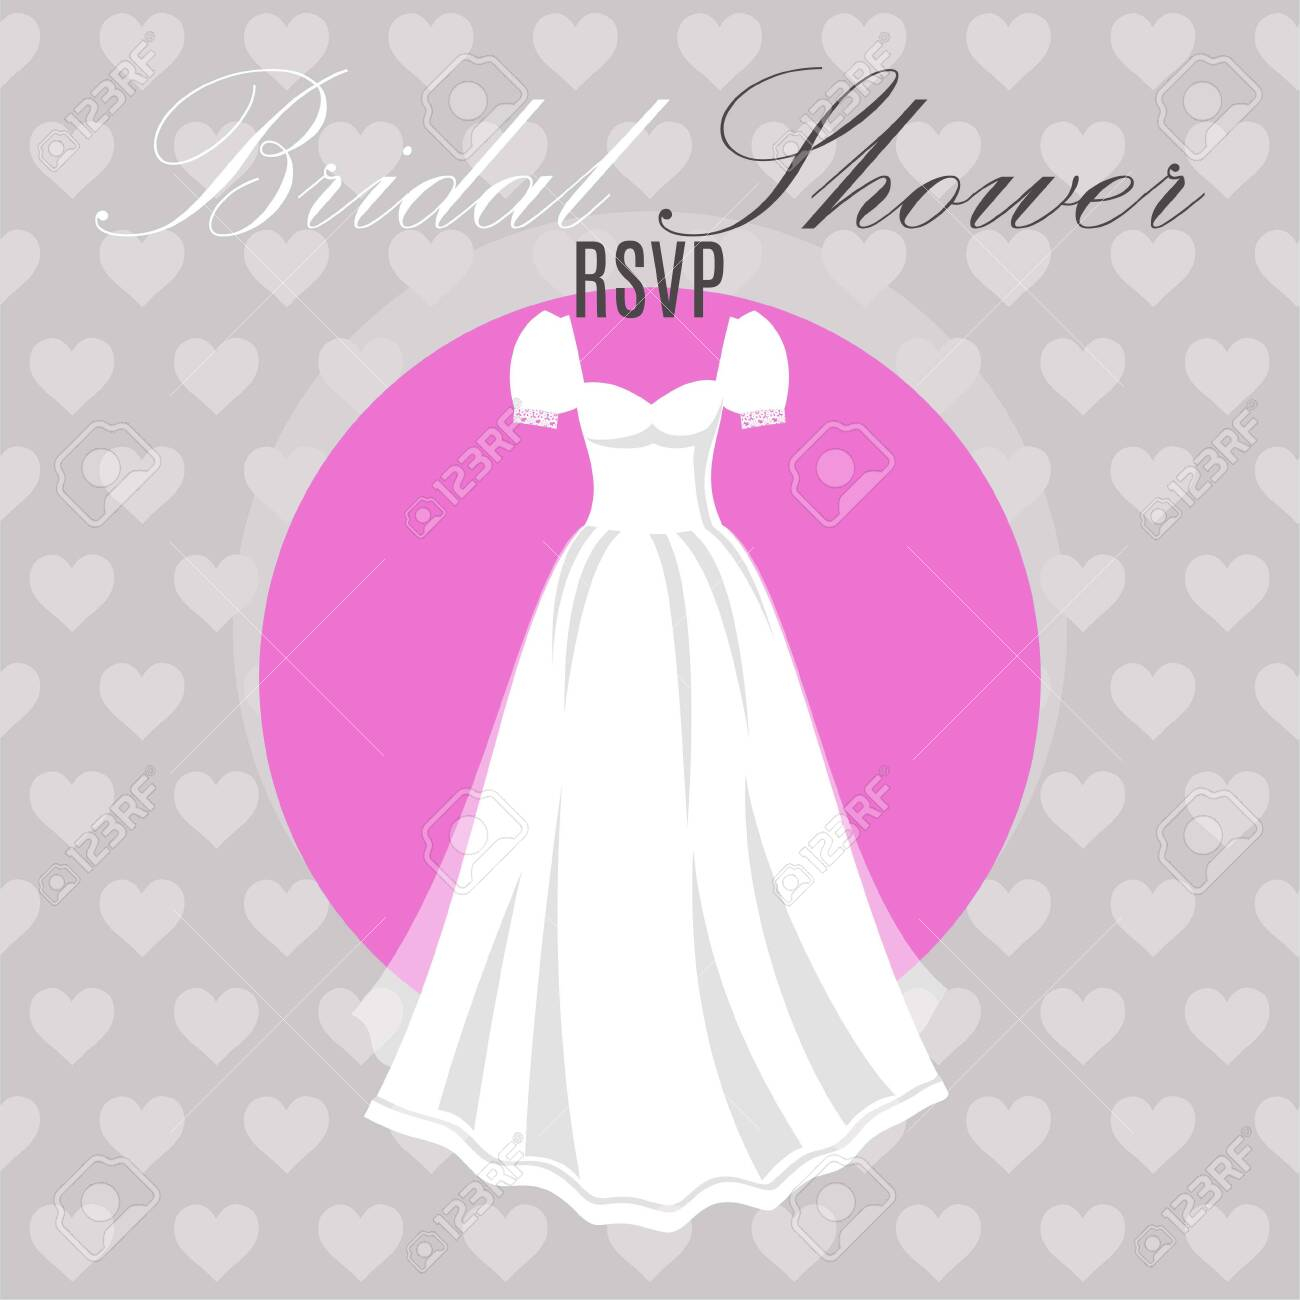 Bridal Shower Dress Vector Illustration On Hearts Background  In Free Bridal Shower Banner Template